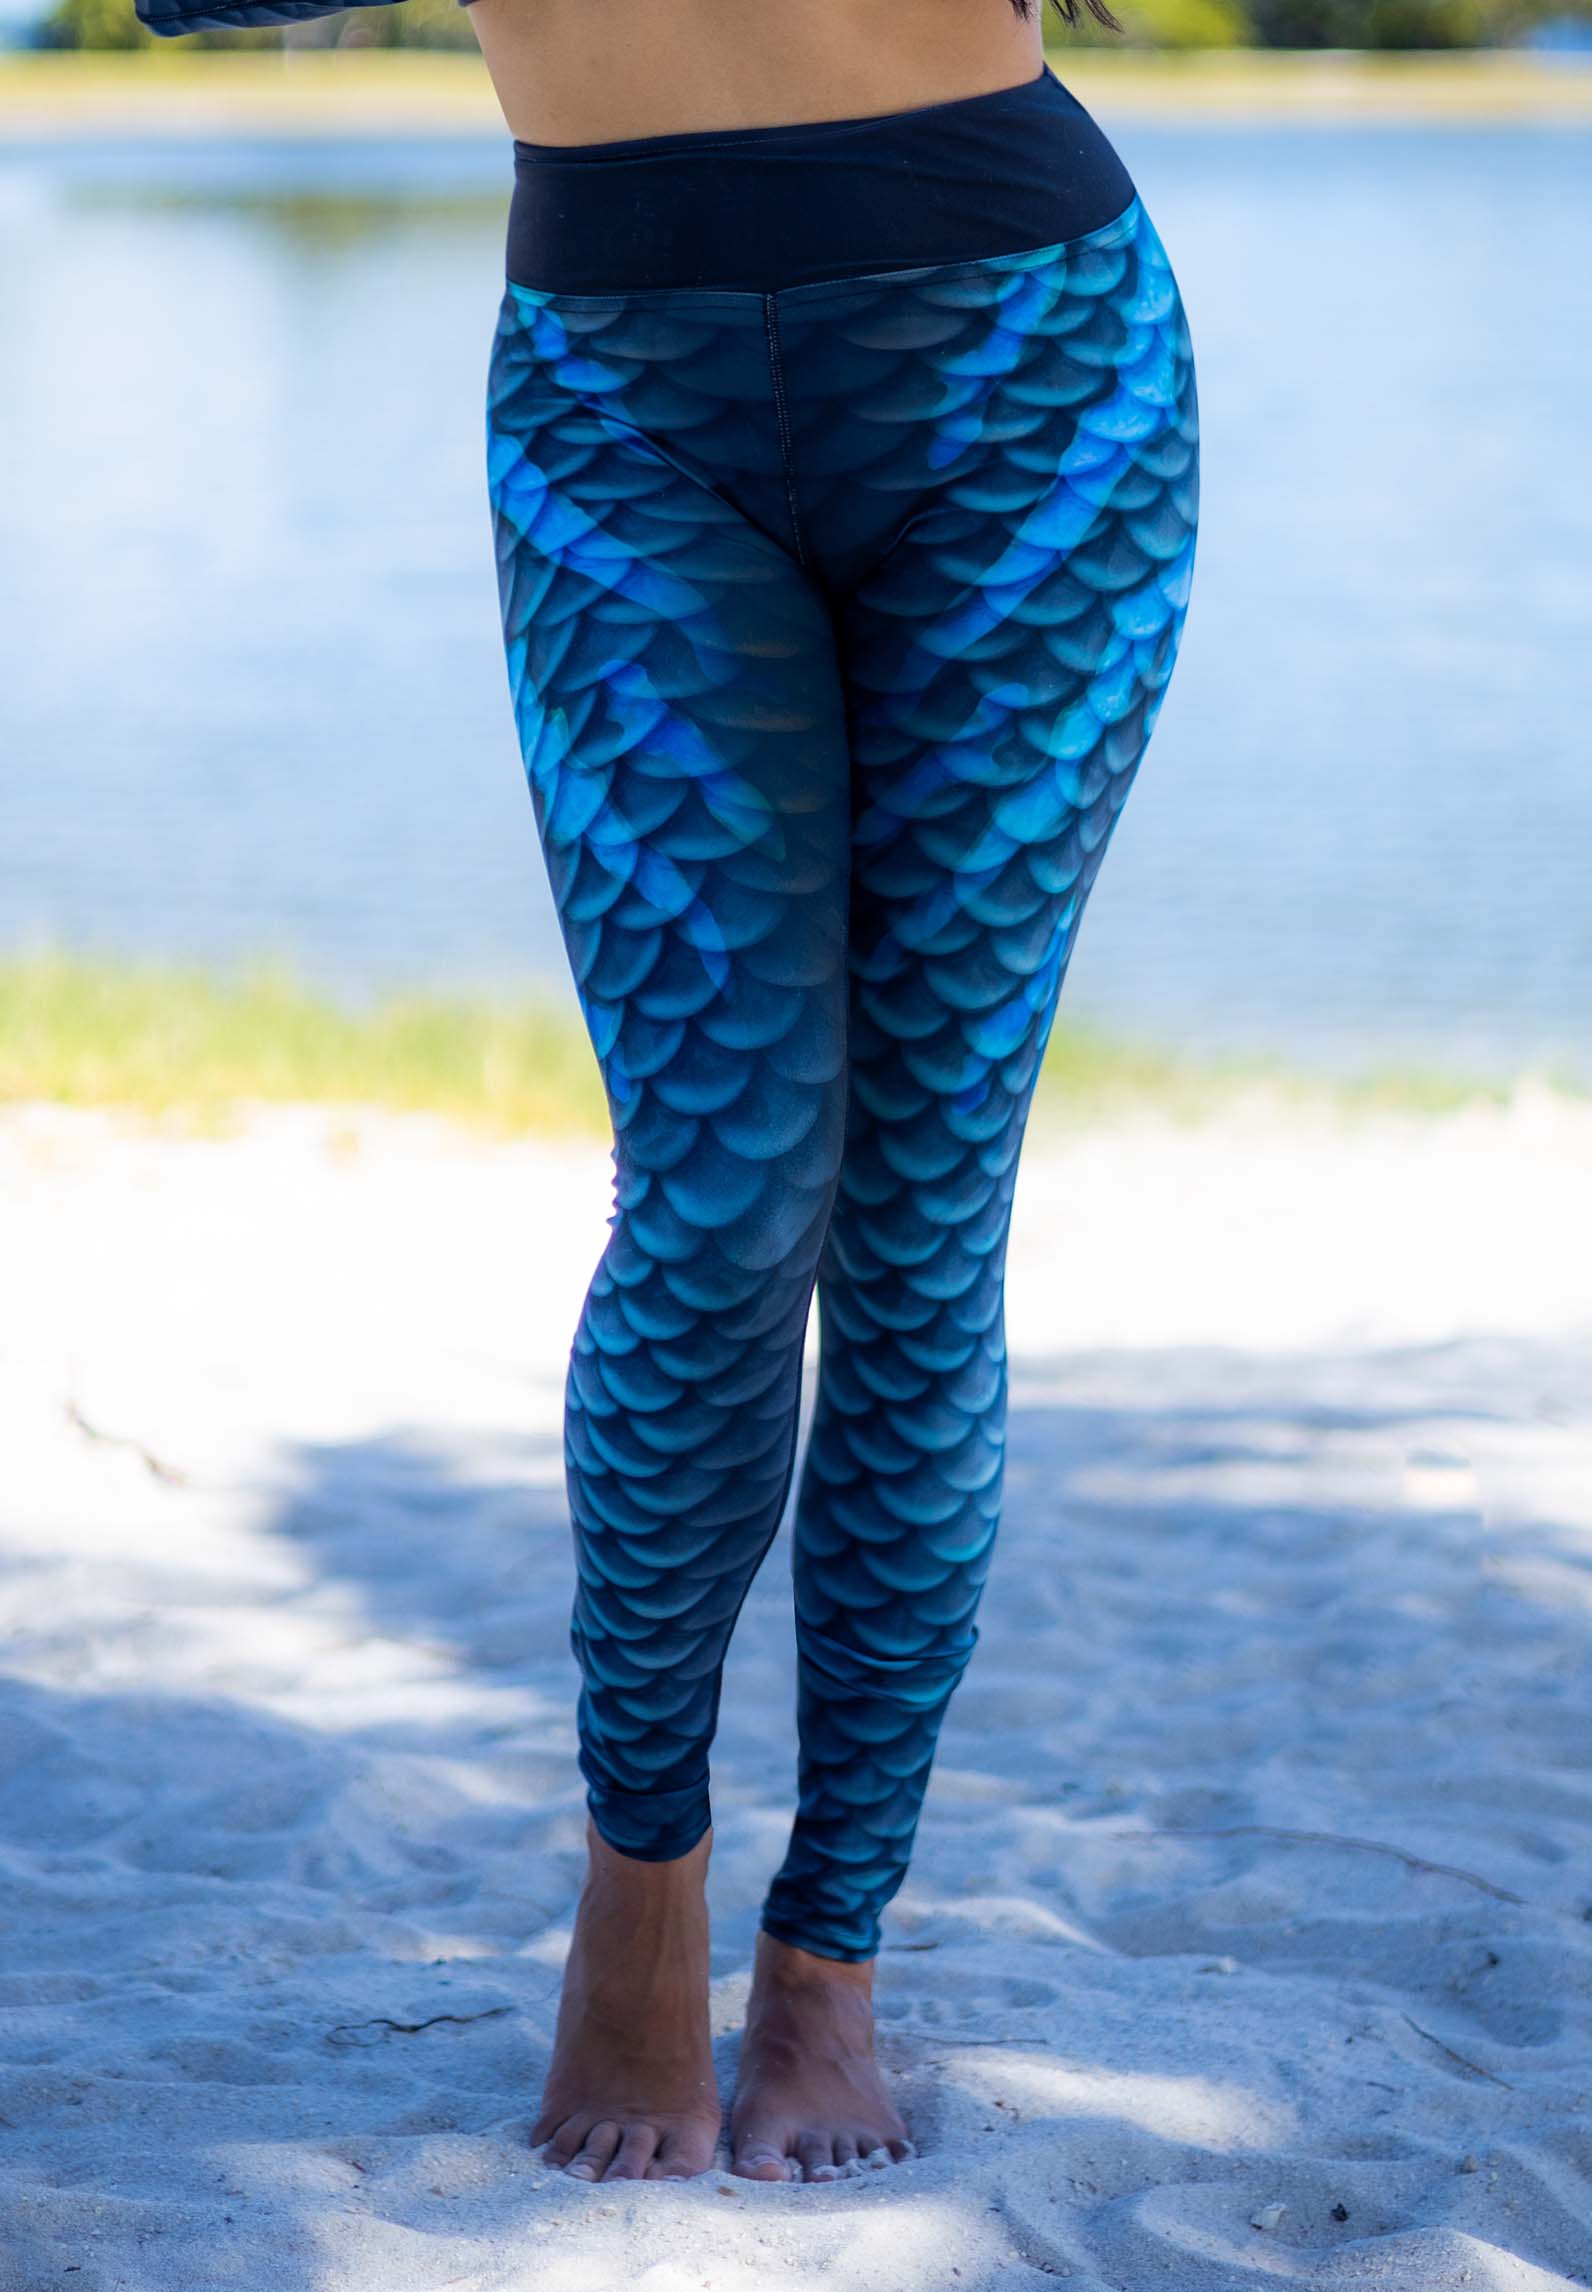 Black mermaid tights